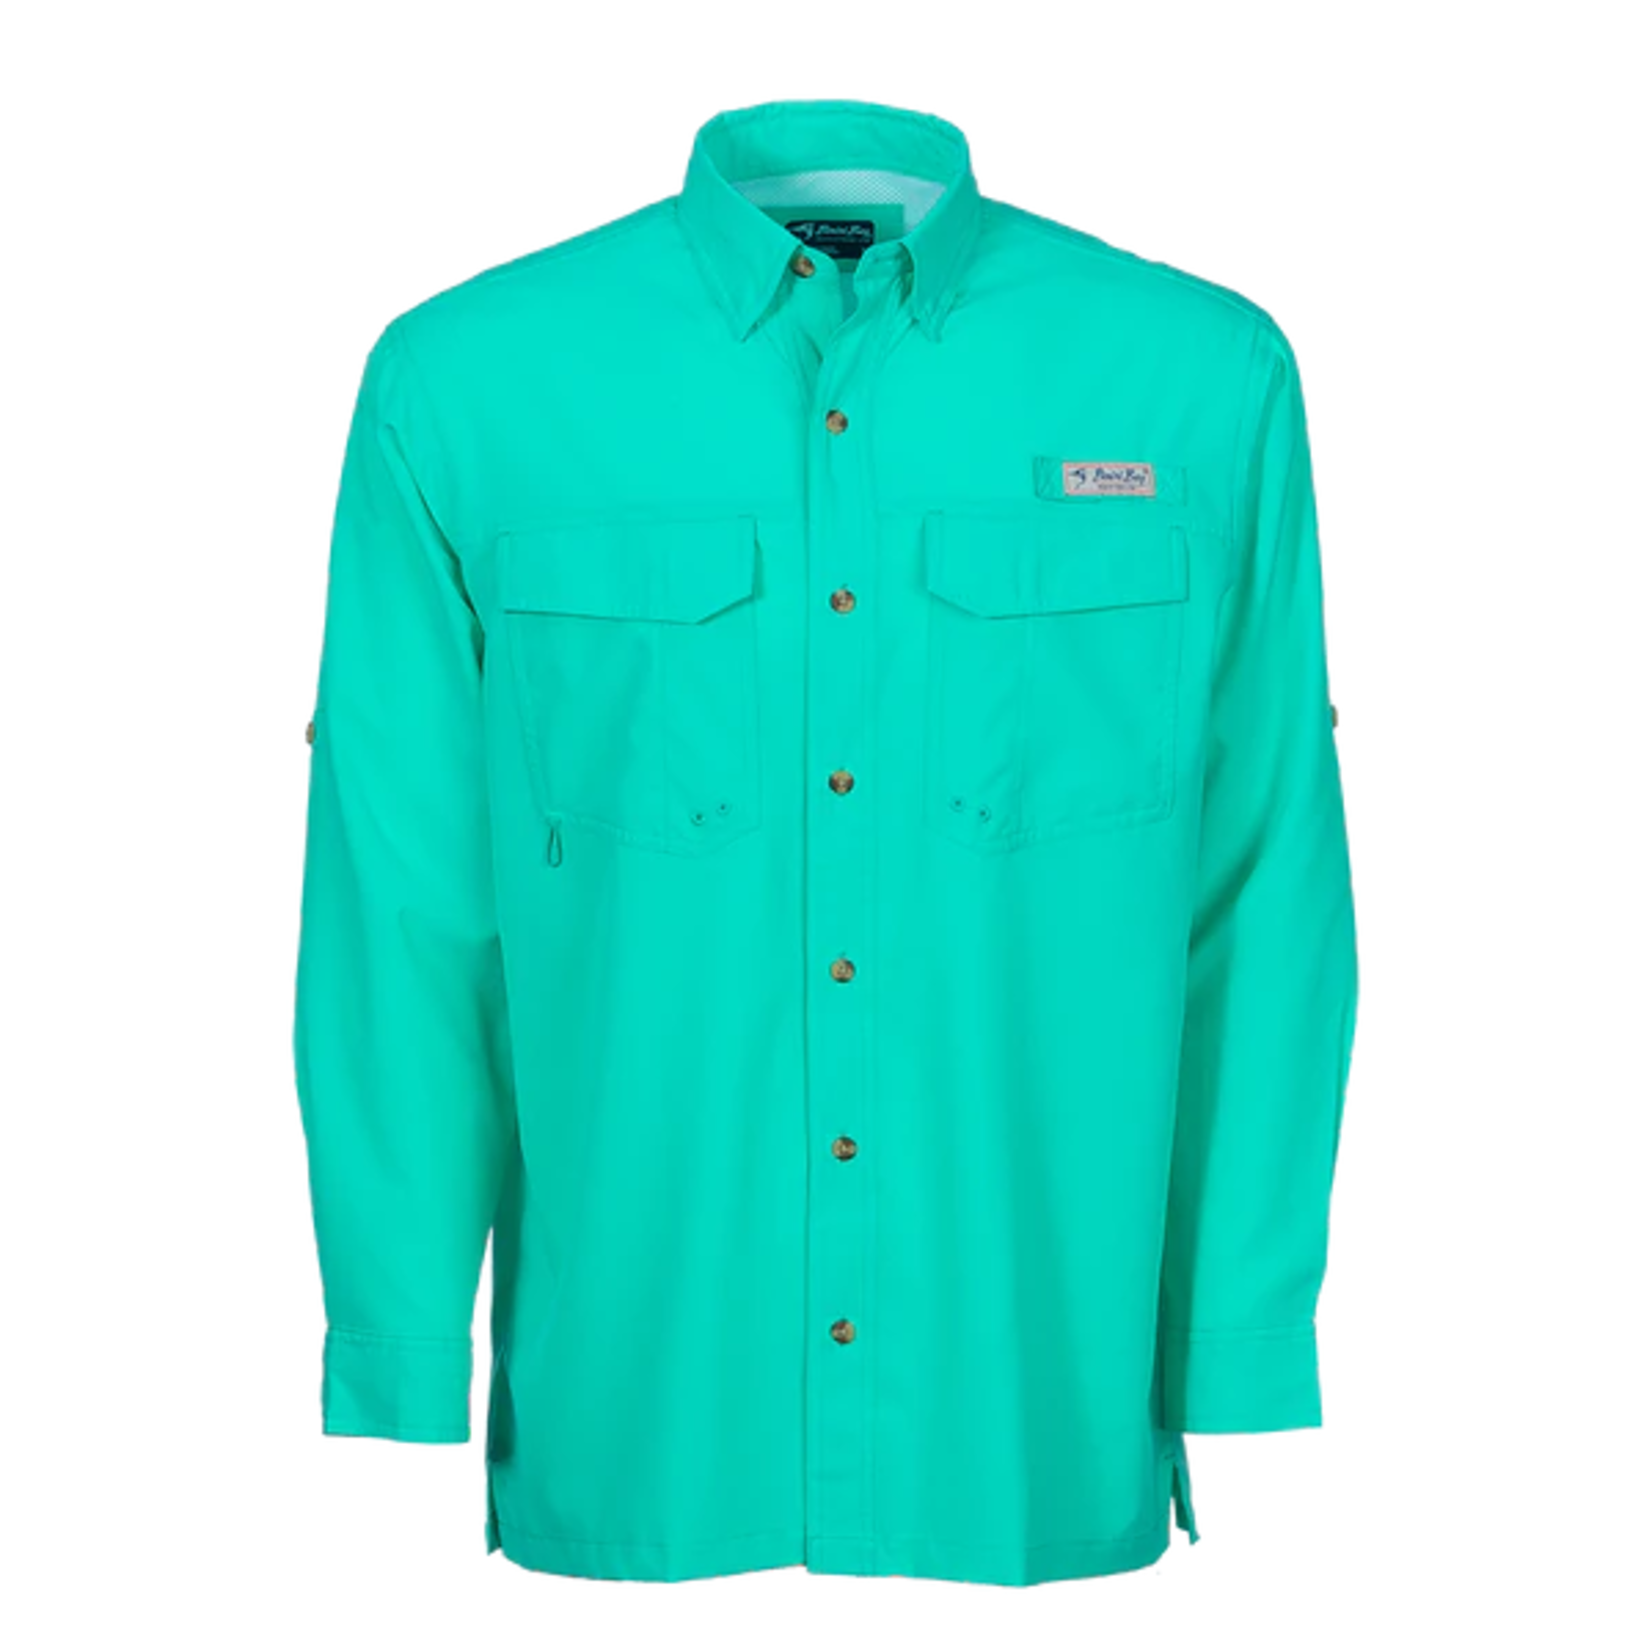 Bimini Bay Outfitters Bimini Flats V Men's Long Sleeve Shirt Featuring BloodGuard Plus